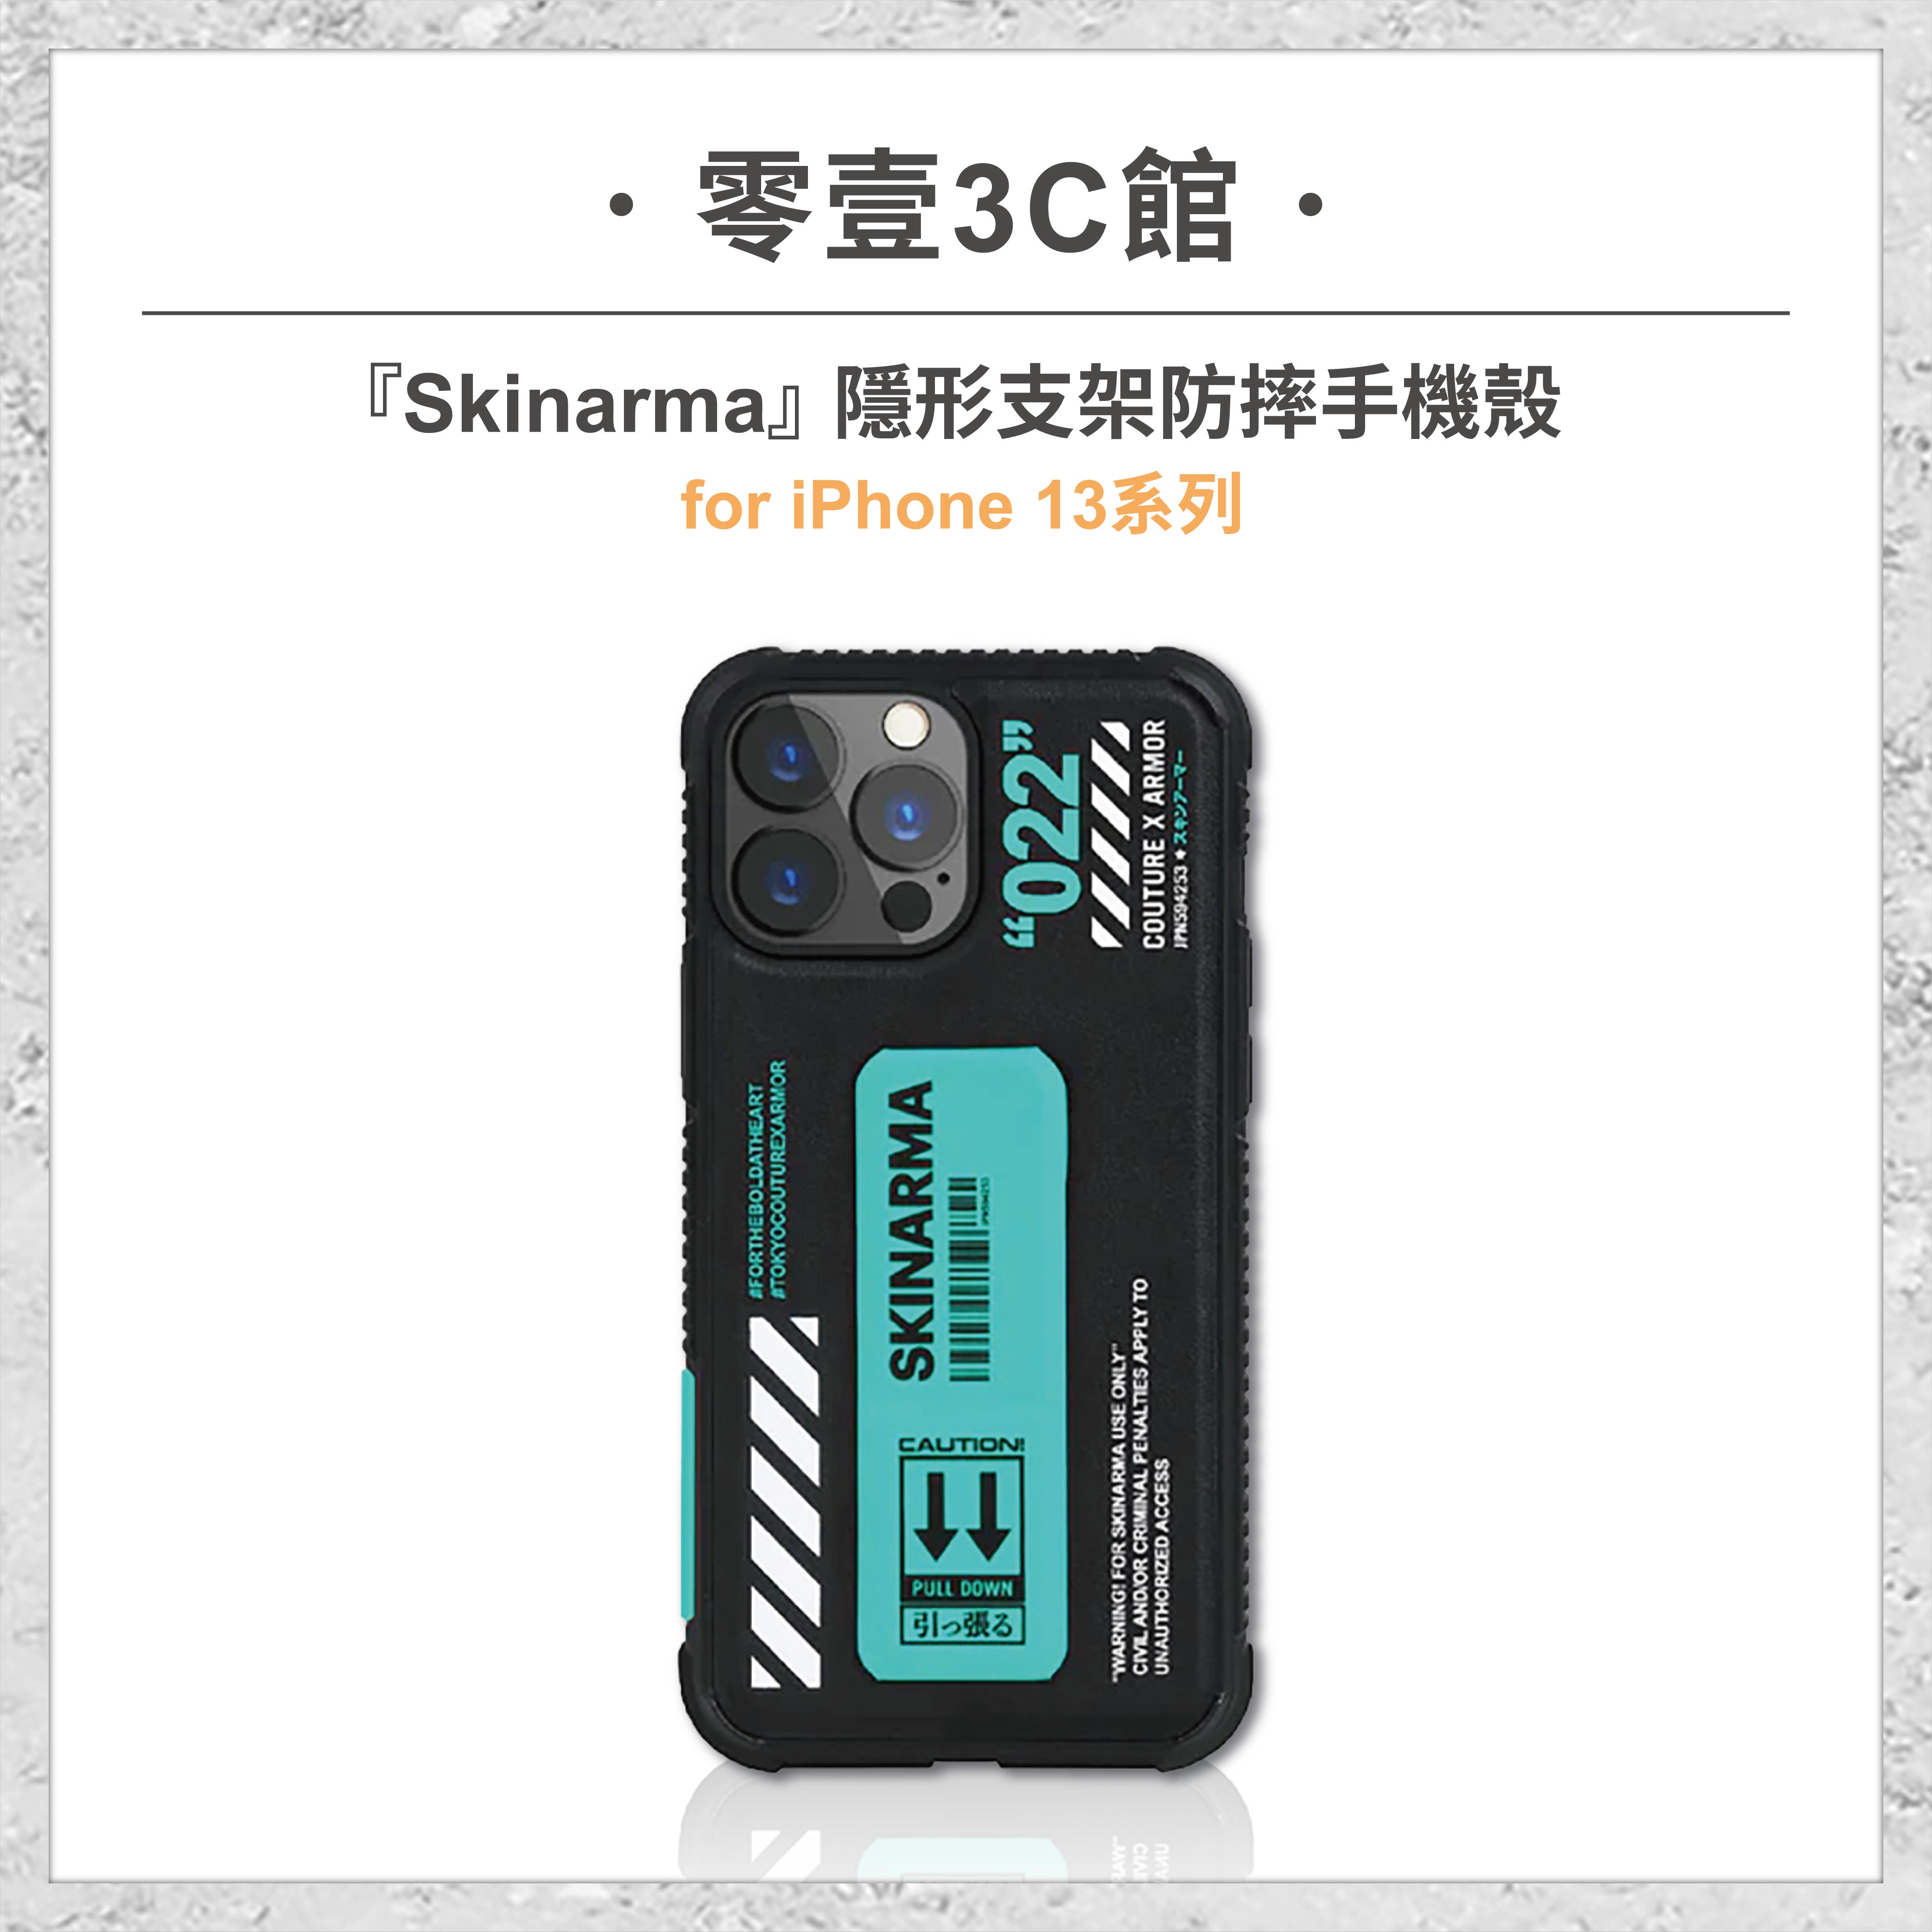 『Skinarma』隱形支架防摔手機殼 for iPhone13系列 13 13 Pro 13 Pro Max 手機防摔保護殼